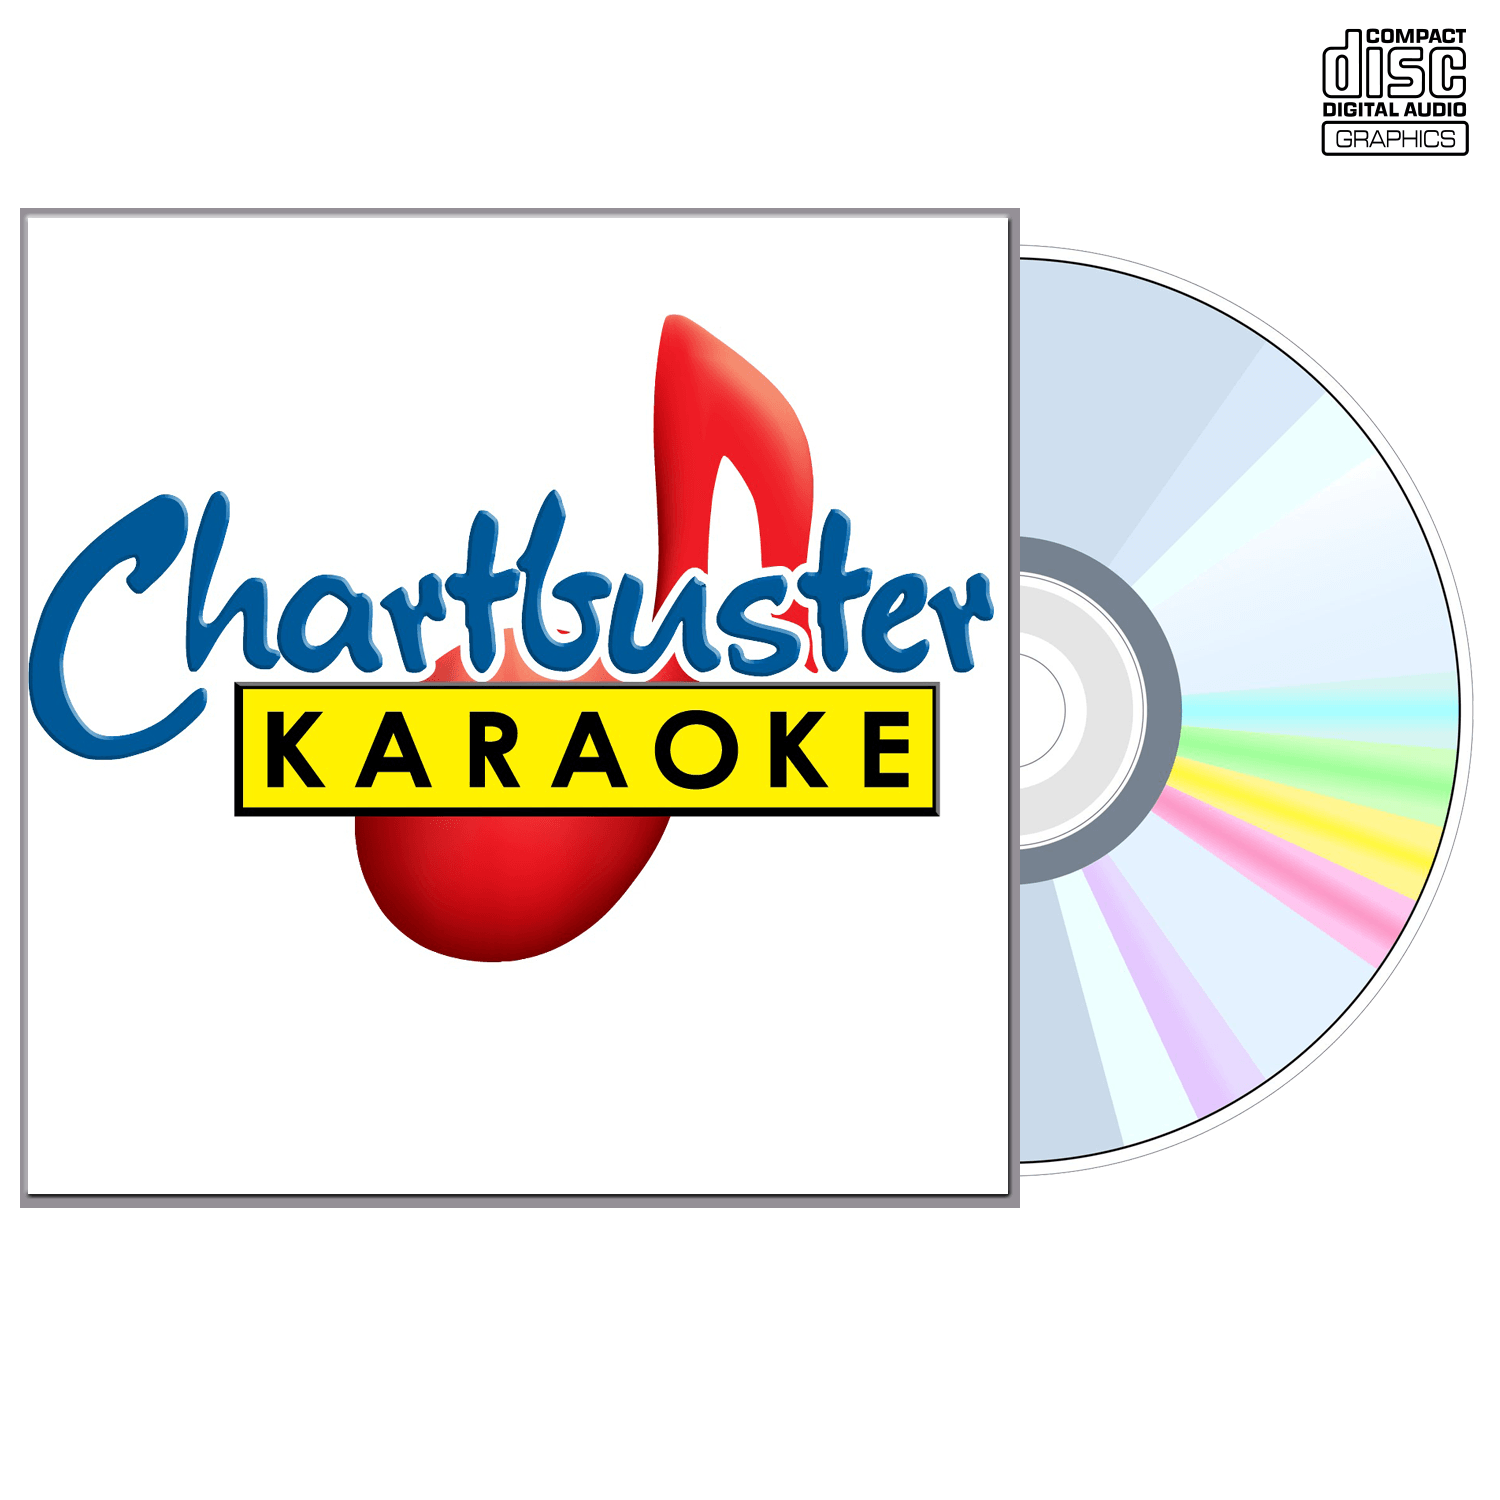 The Animals - CD+G - Chartbuster Karaoke - Karaoke Home Entertainment